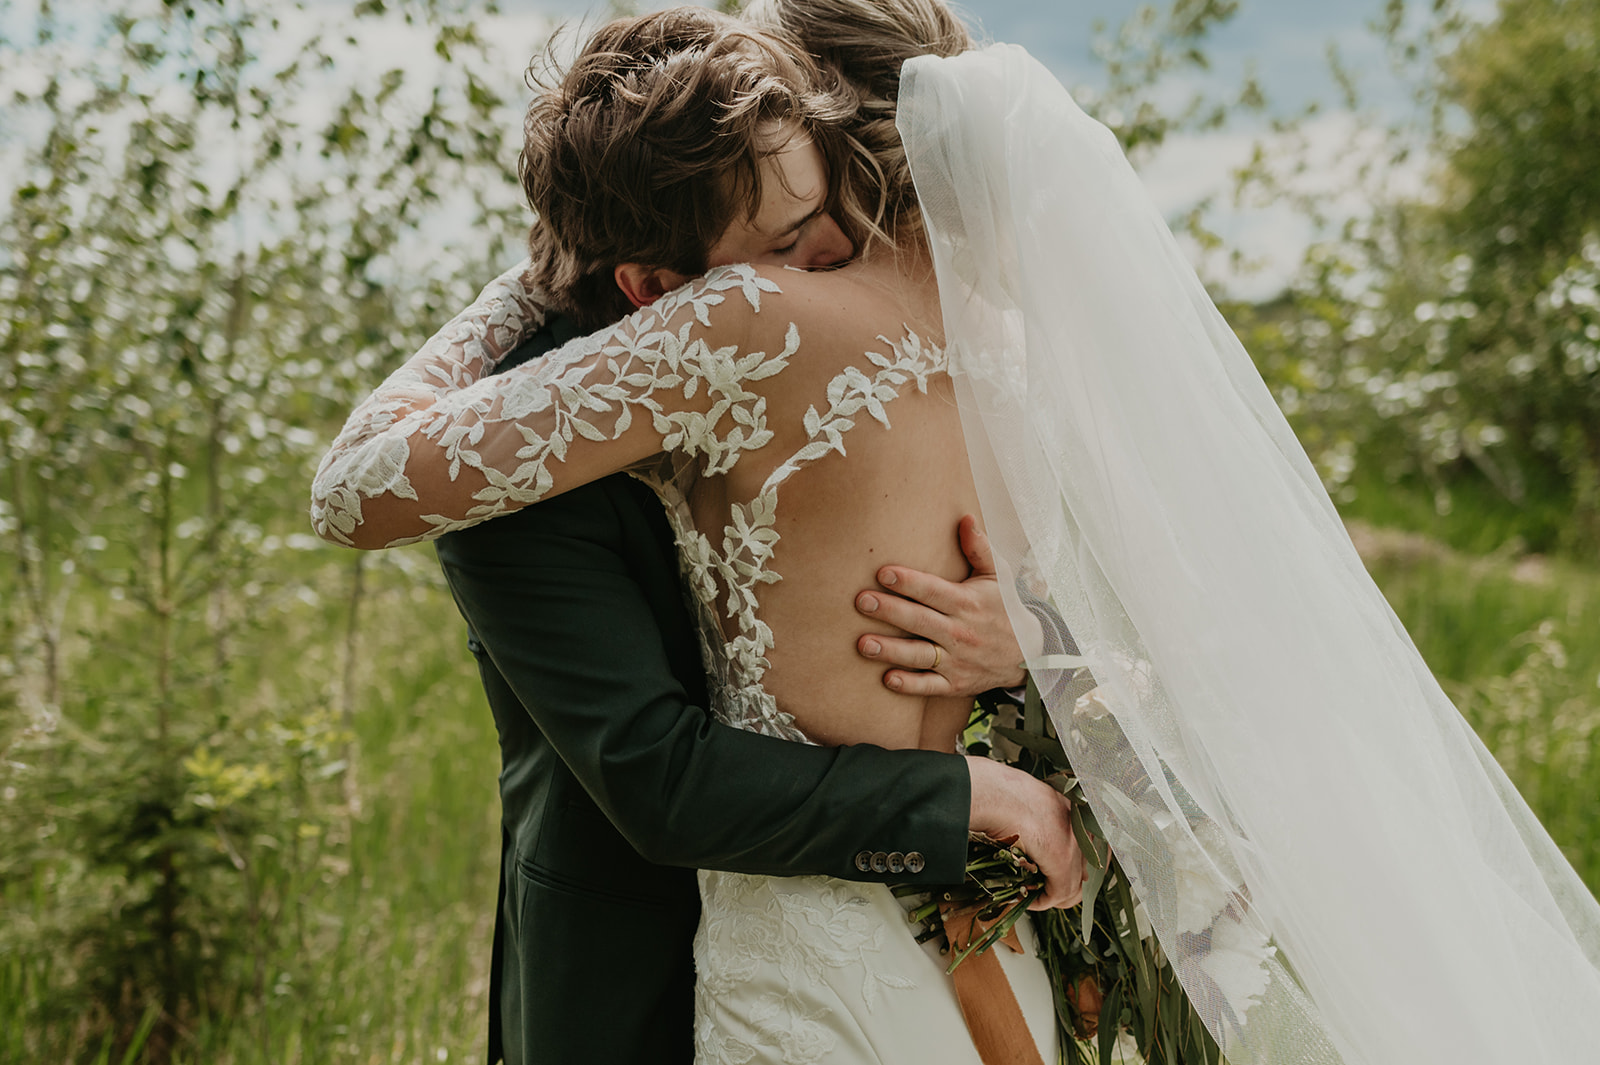 Intimate Tented Family-Focused Backyard Wedding in Edmonton Alberta featured on Brontë Bride